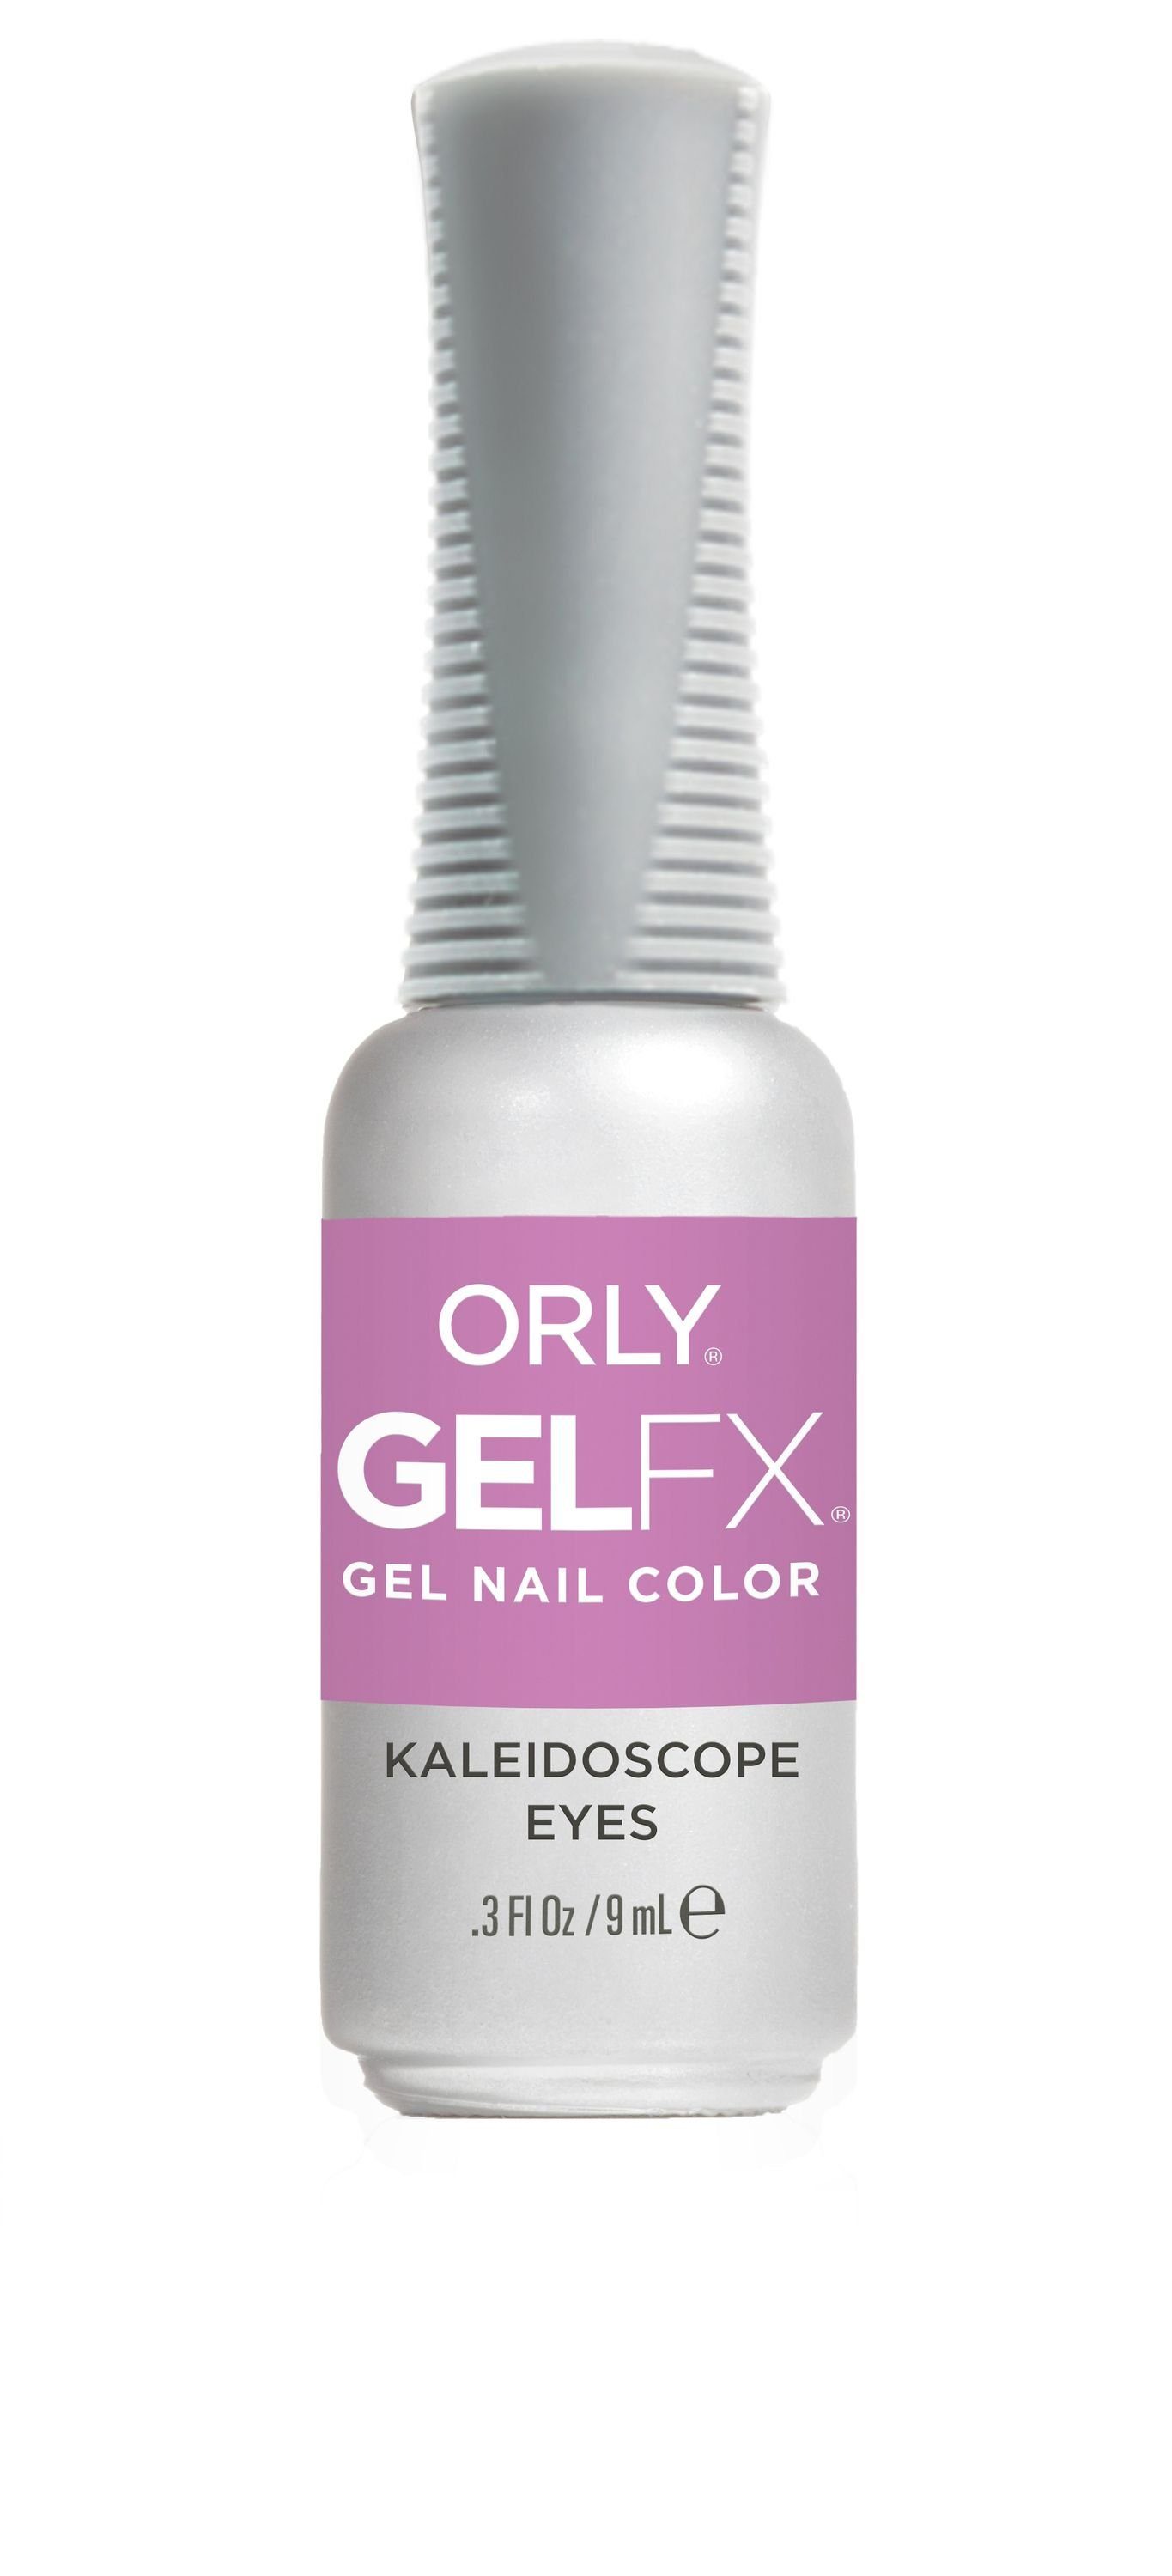 UV-Nagellack Kaleidoscope ml 9 Eyes, ORLY GEL FX